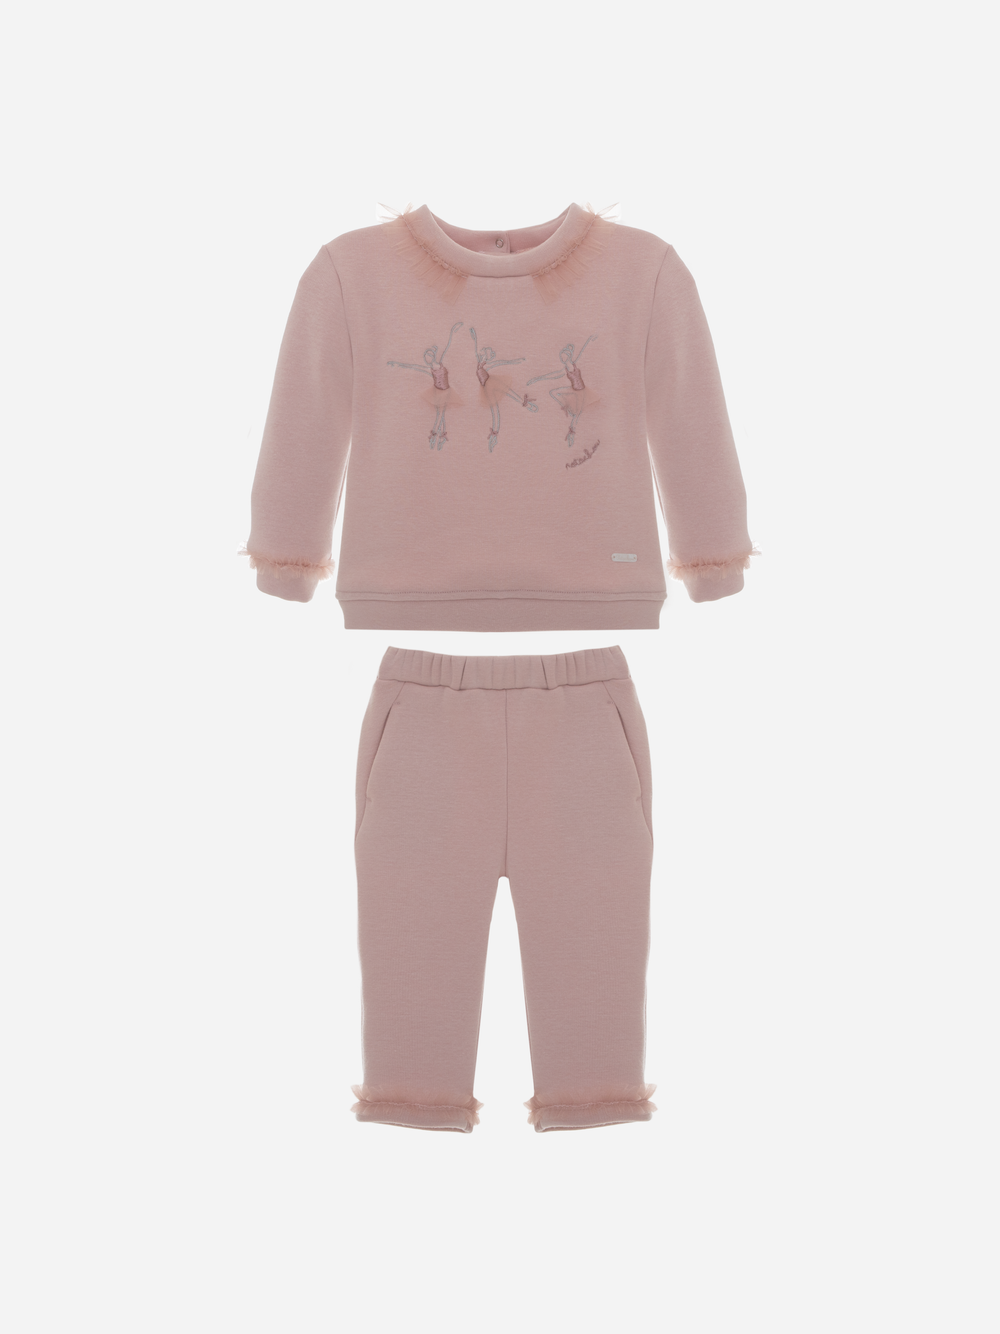 Pink Cotton Fleece Set